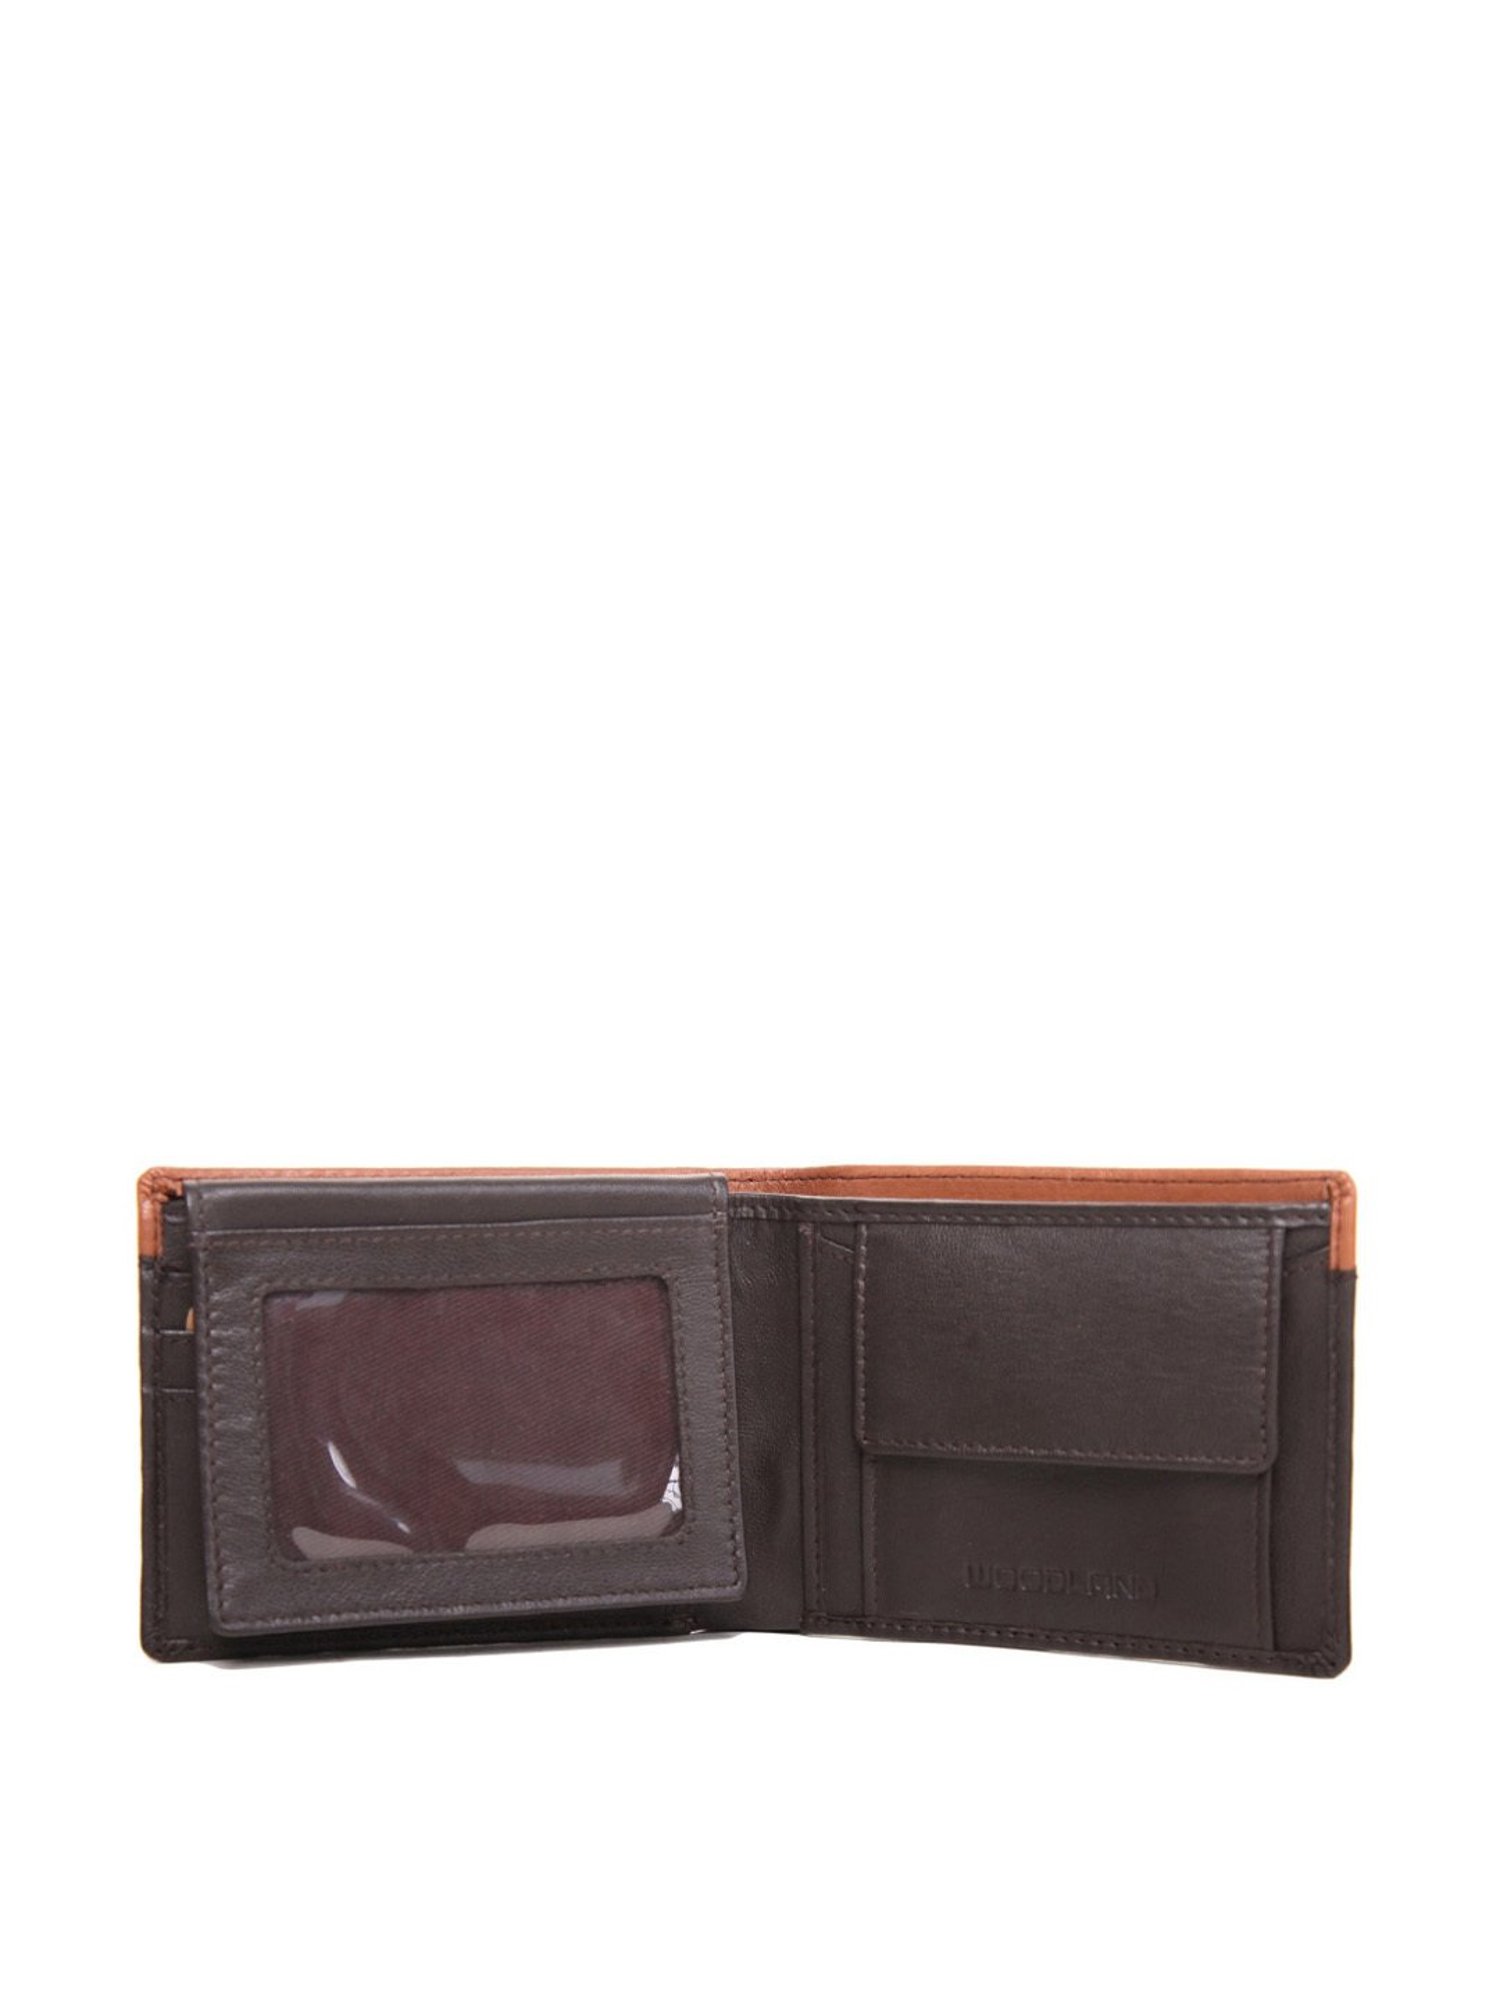 Luxury Men's Wallet Leather Solid Slim Wallets Men Pu Leather Credit Card  Holder | eBay